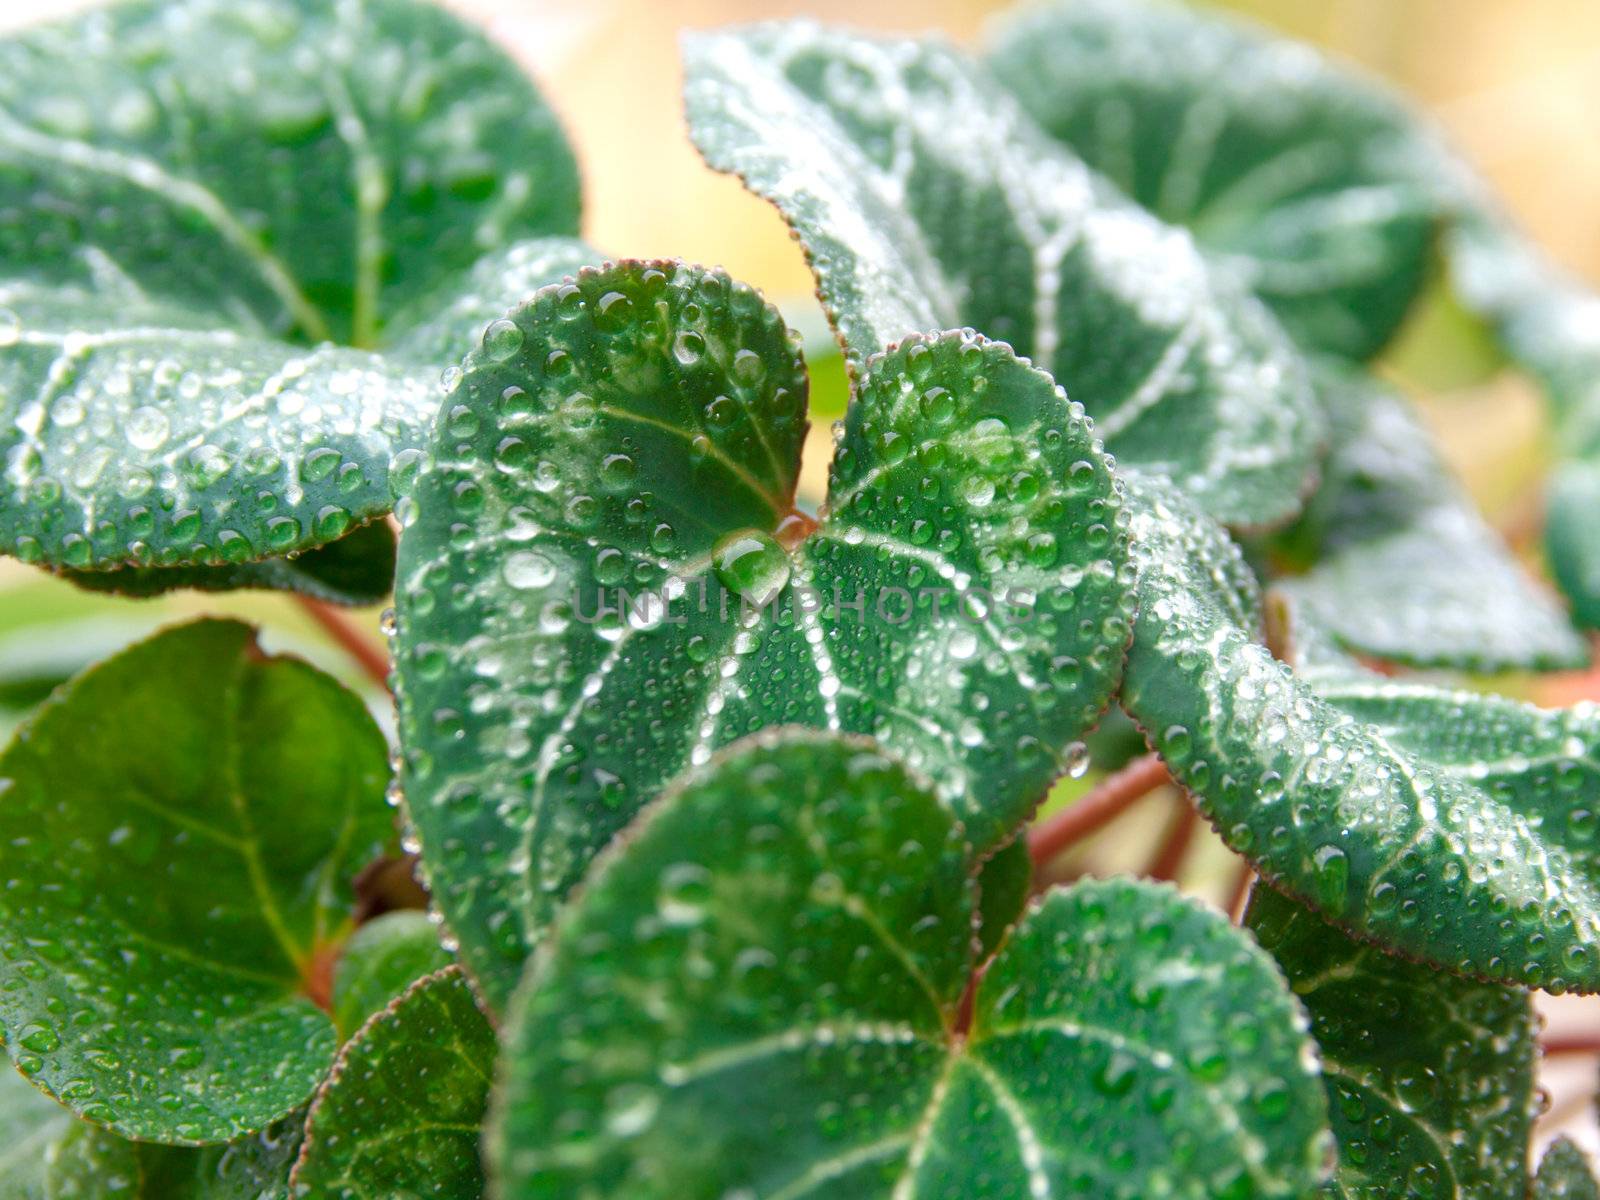 rain drops on plant leaf  by motorolka